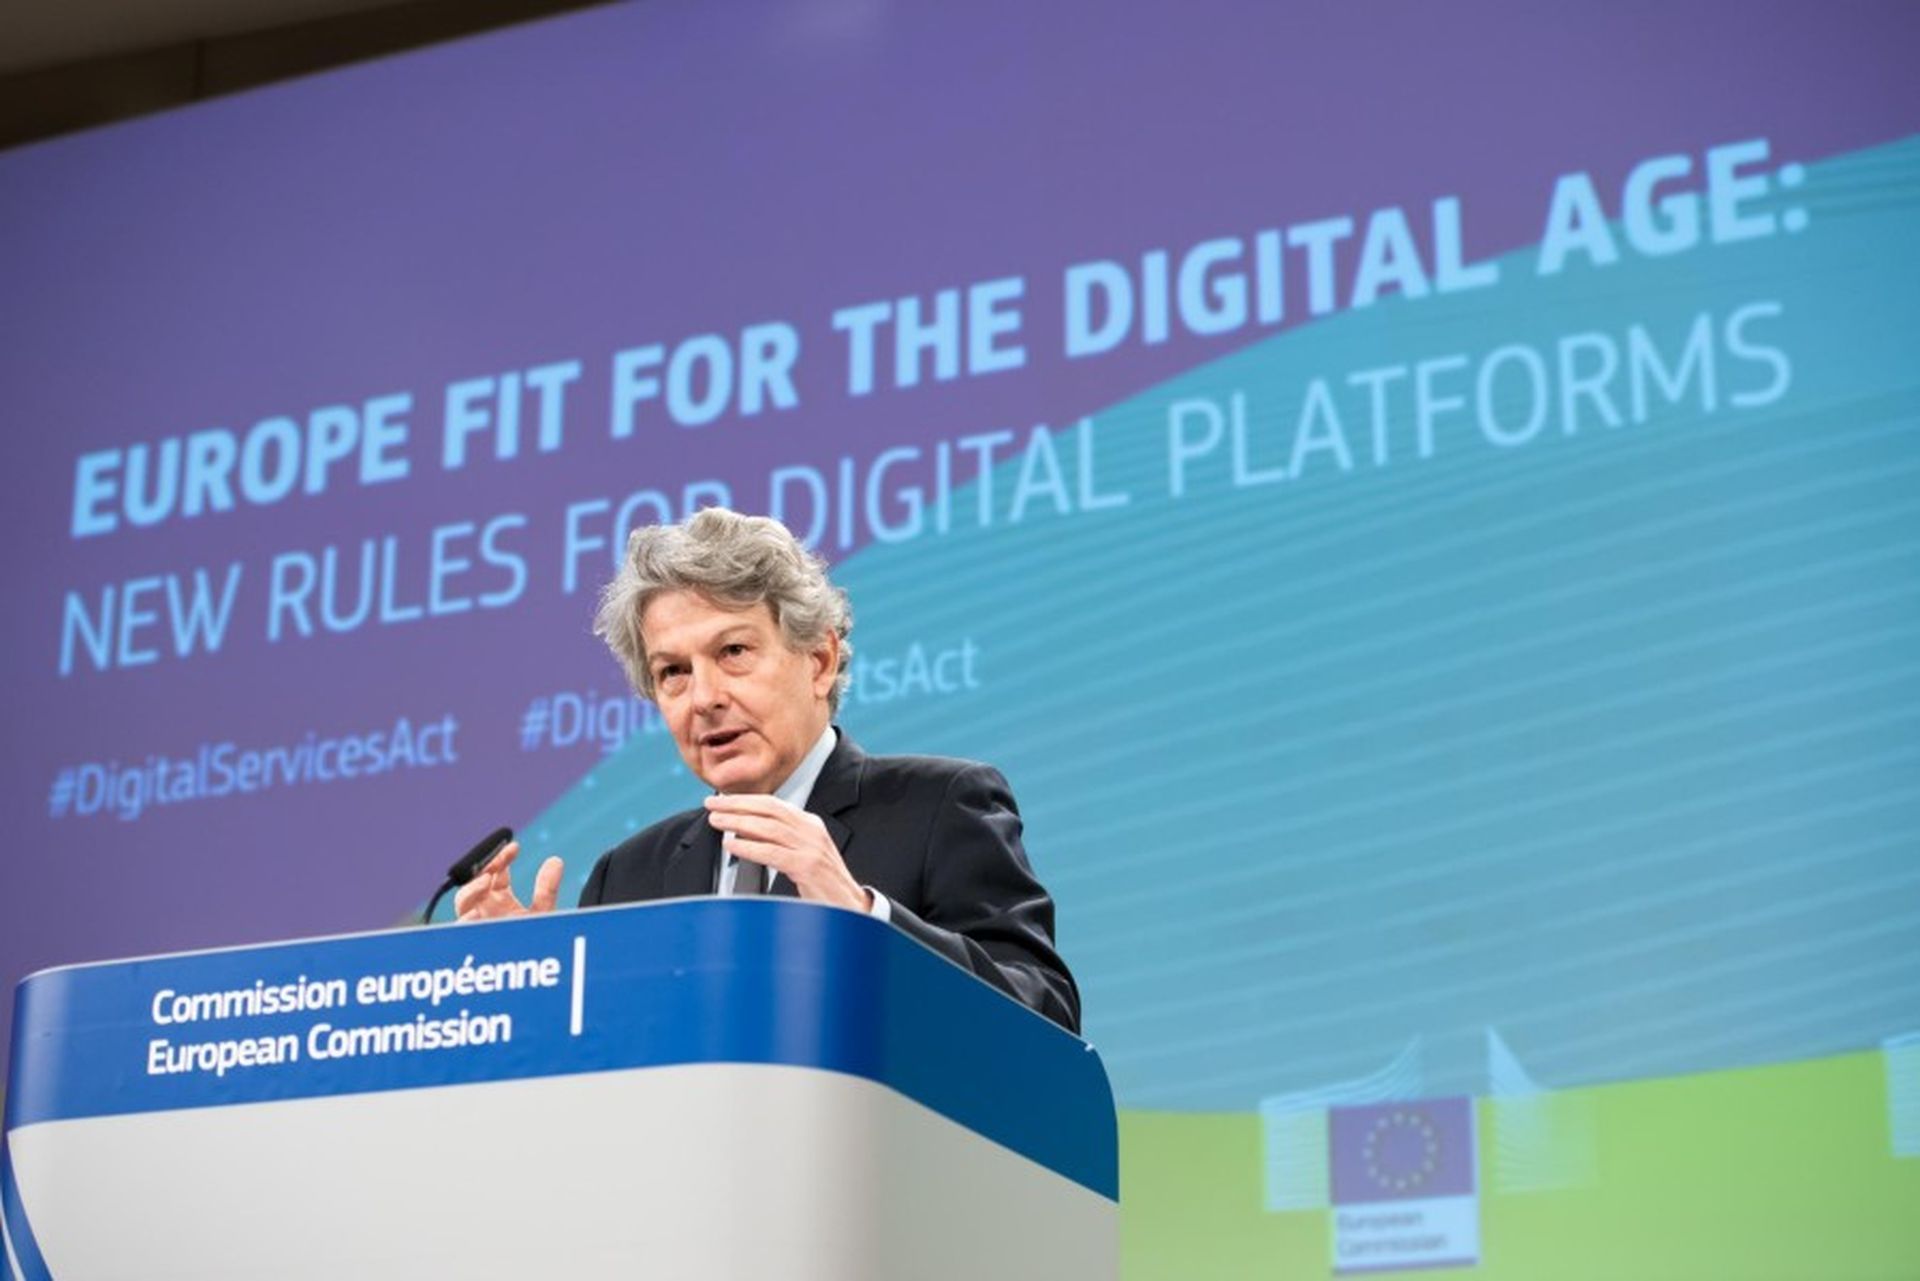 EU's Digital Markets Act